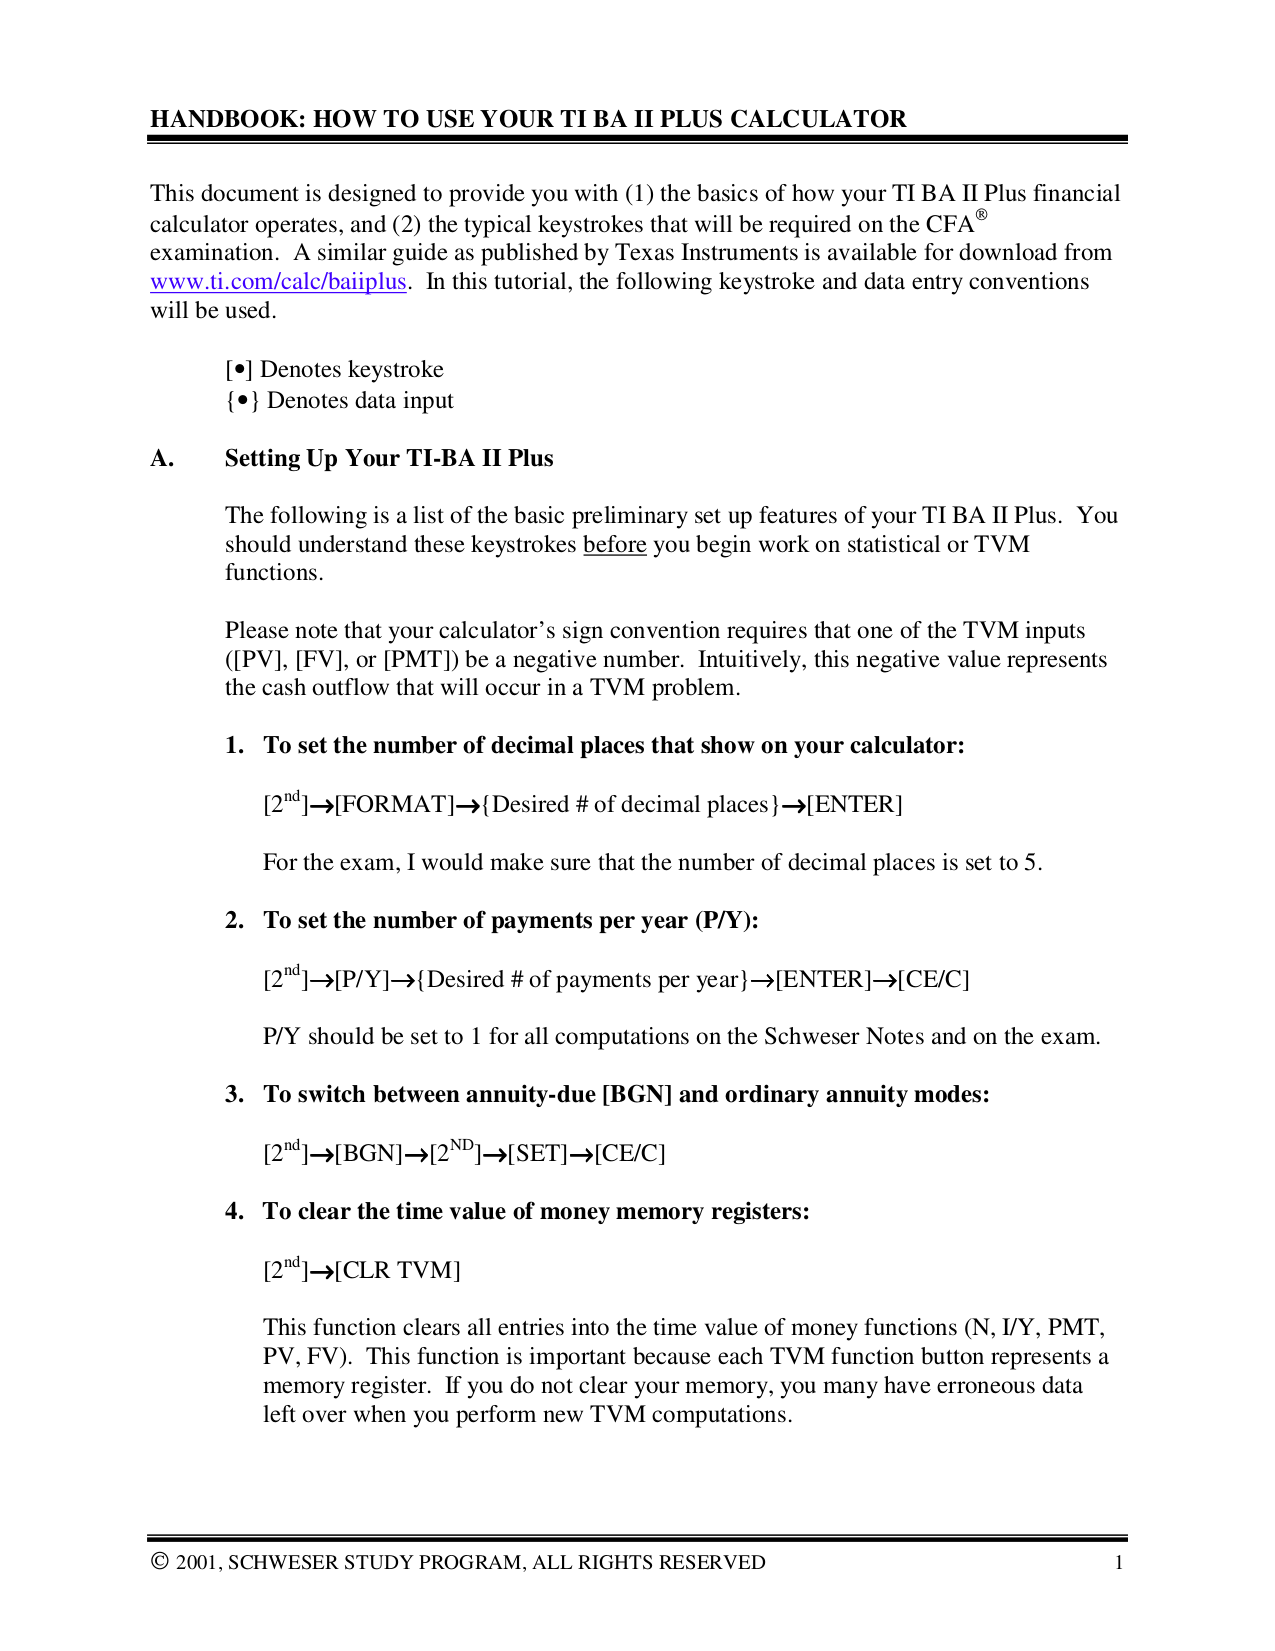 pdf for TI Calculator BA II PLUS PROFESSIONAL manual